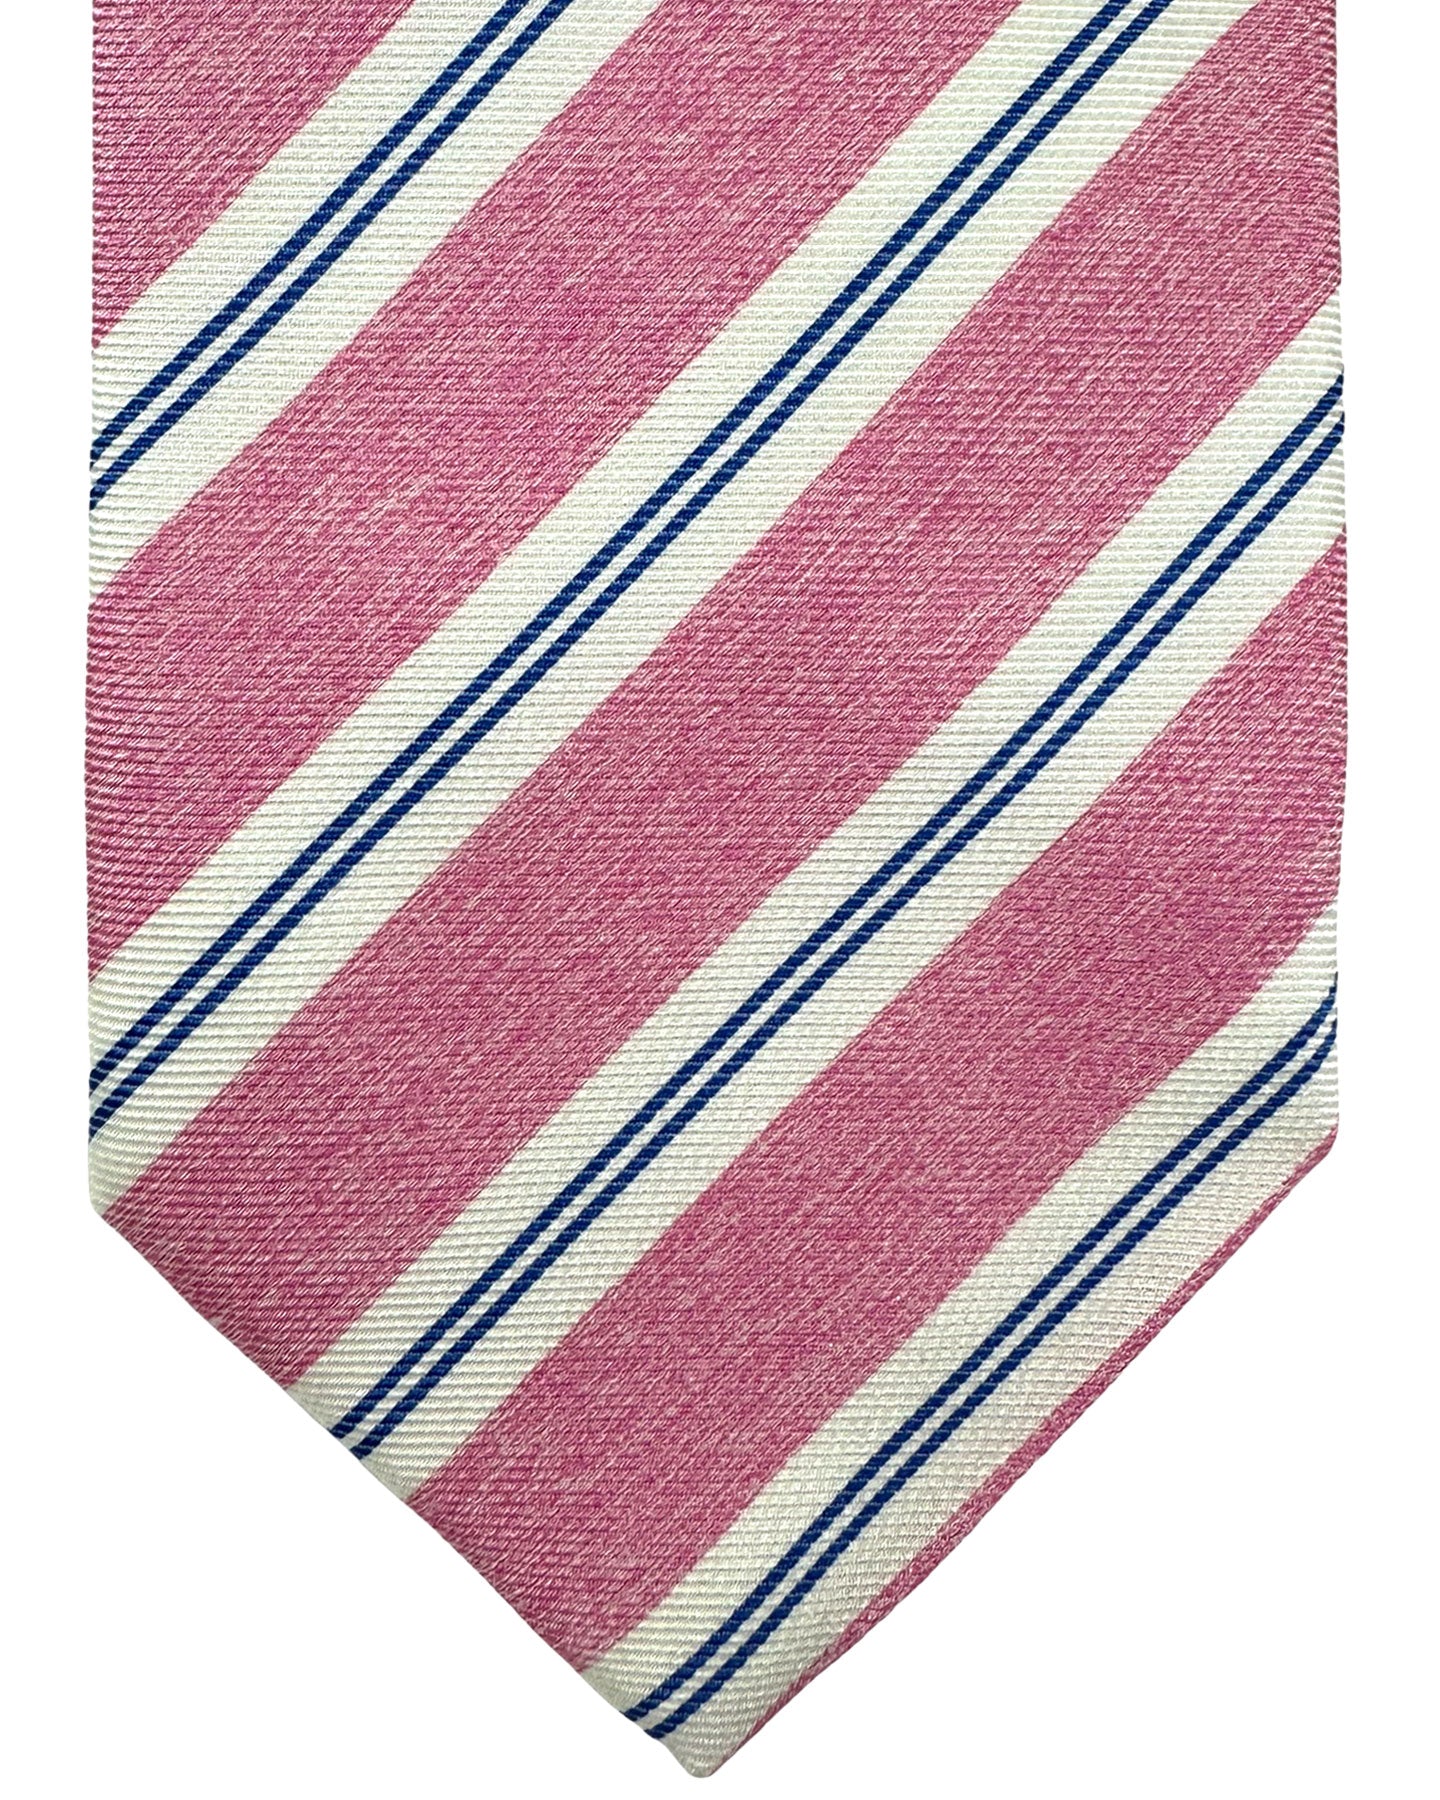 Luigi Borrelli Silk Tie Pink Royal Blue Stripes